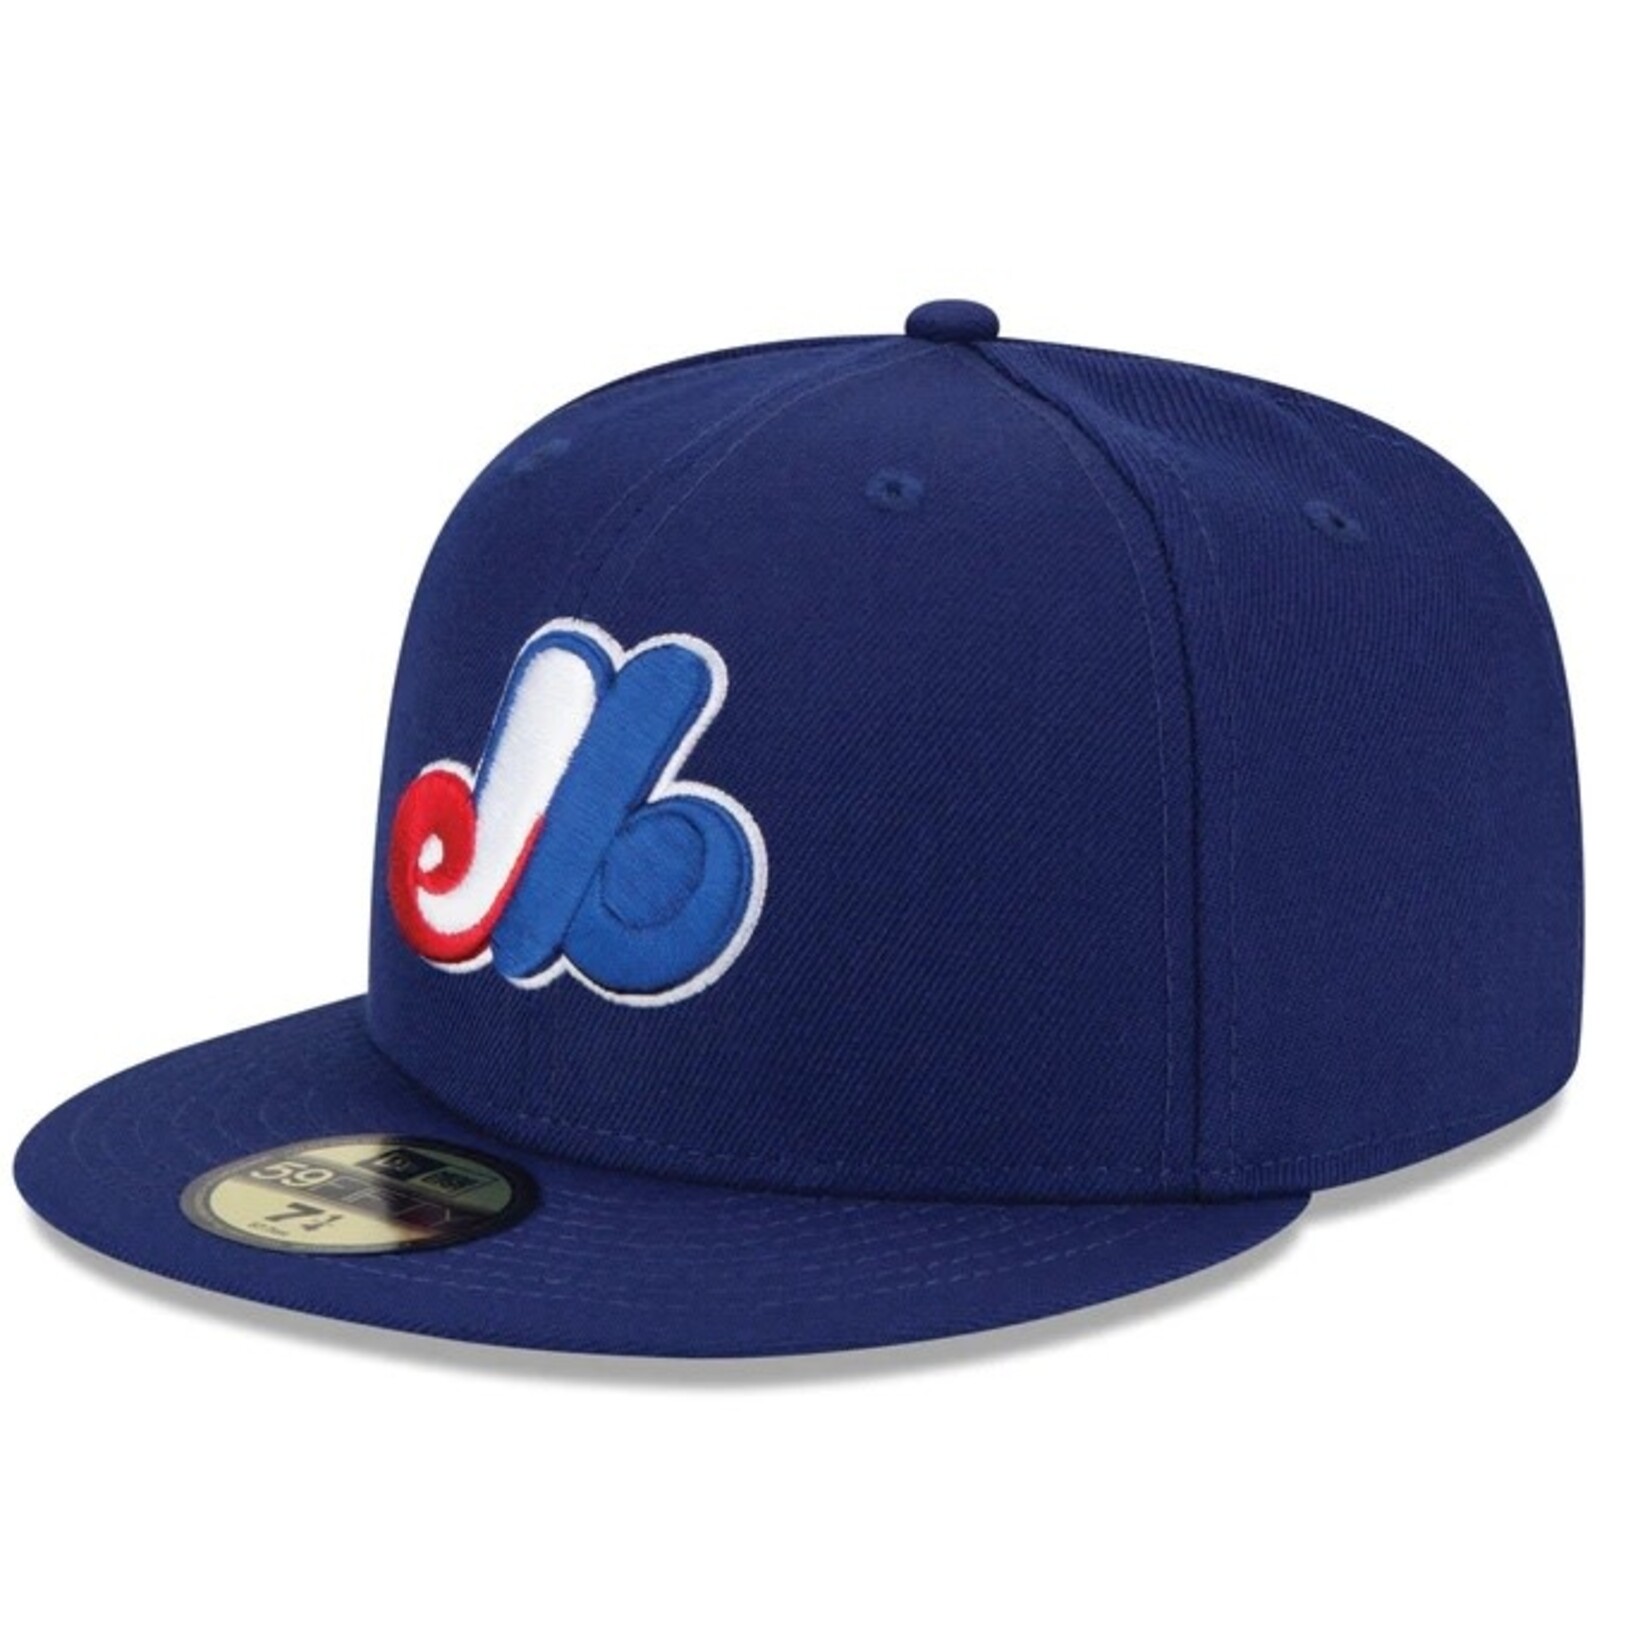 New Era New Era Hat, 5950 Cooperstown, MLB, Montreal Expos 2004